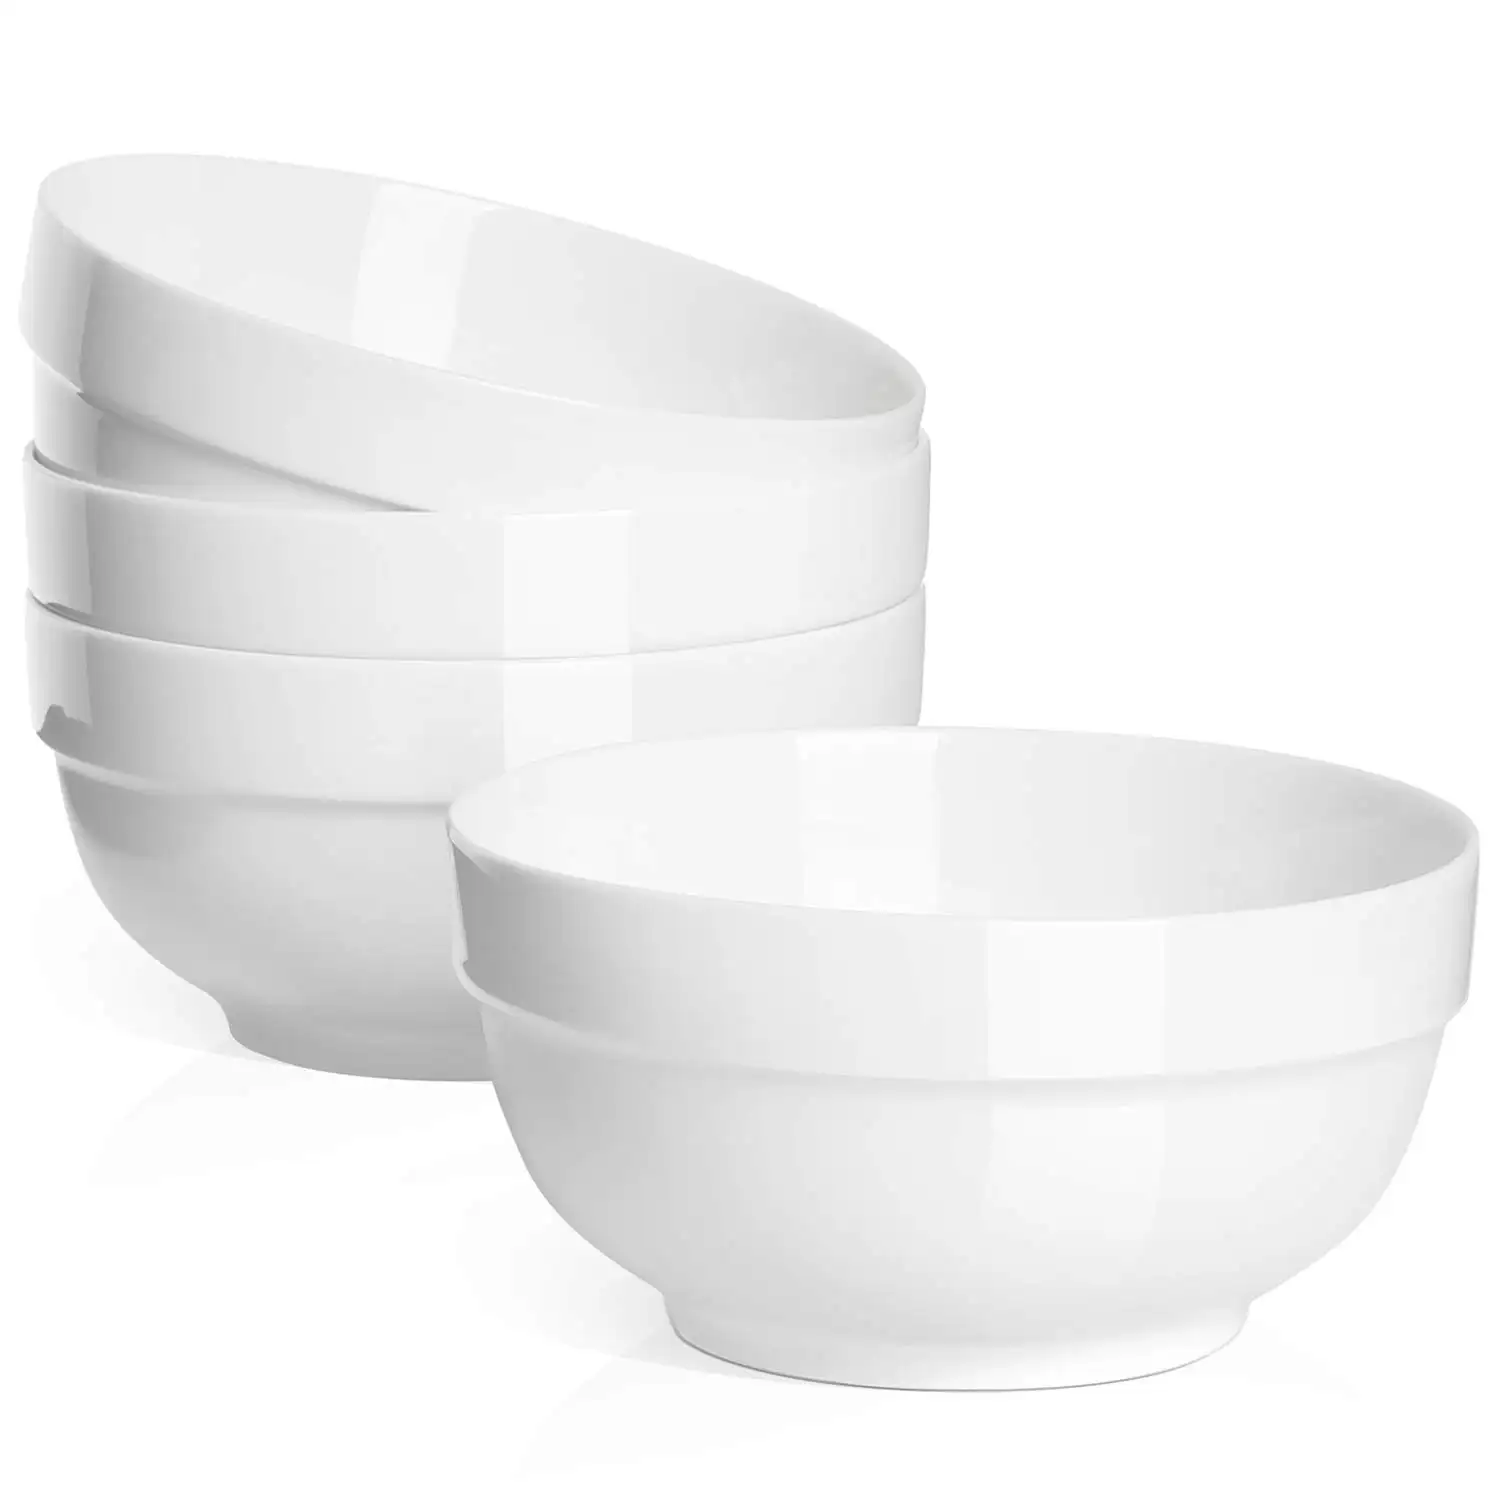 16 pcs simple and pure ceramic dinner set  white porcelain bowls